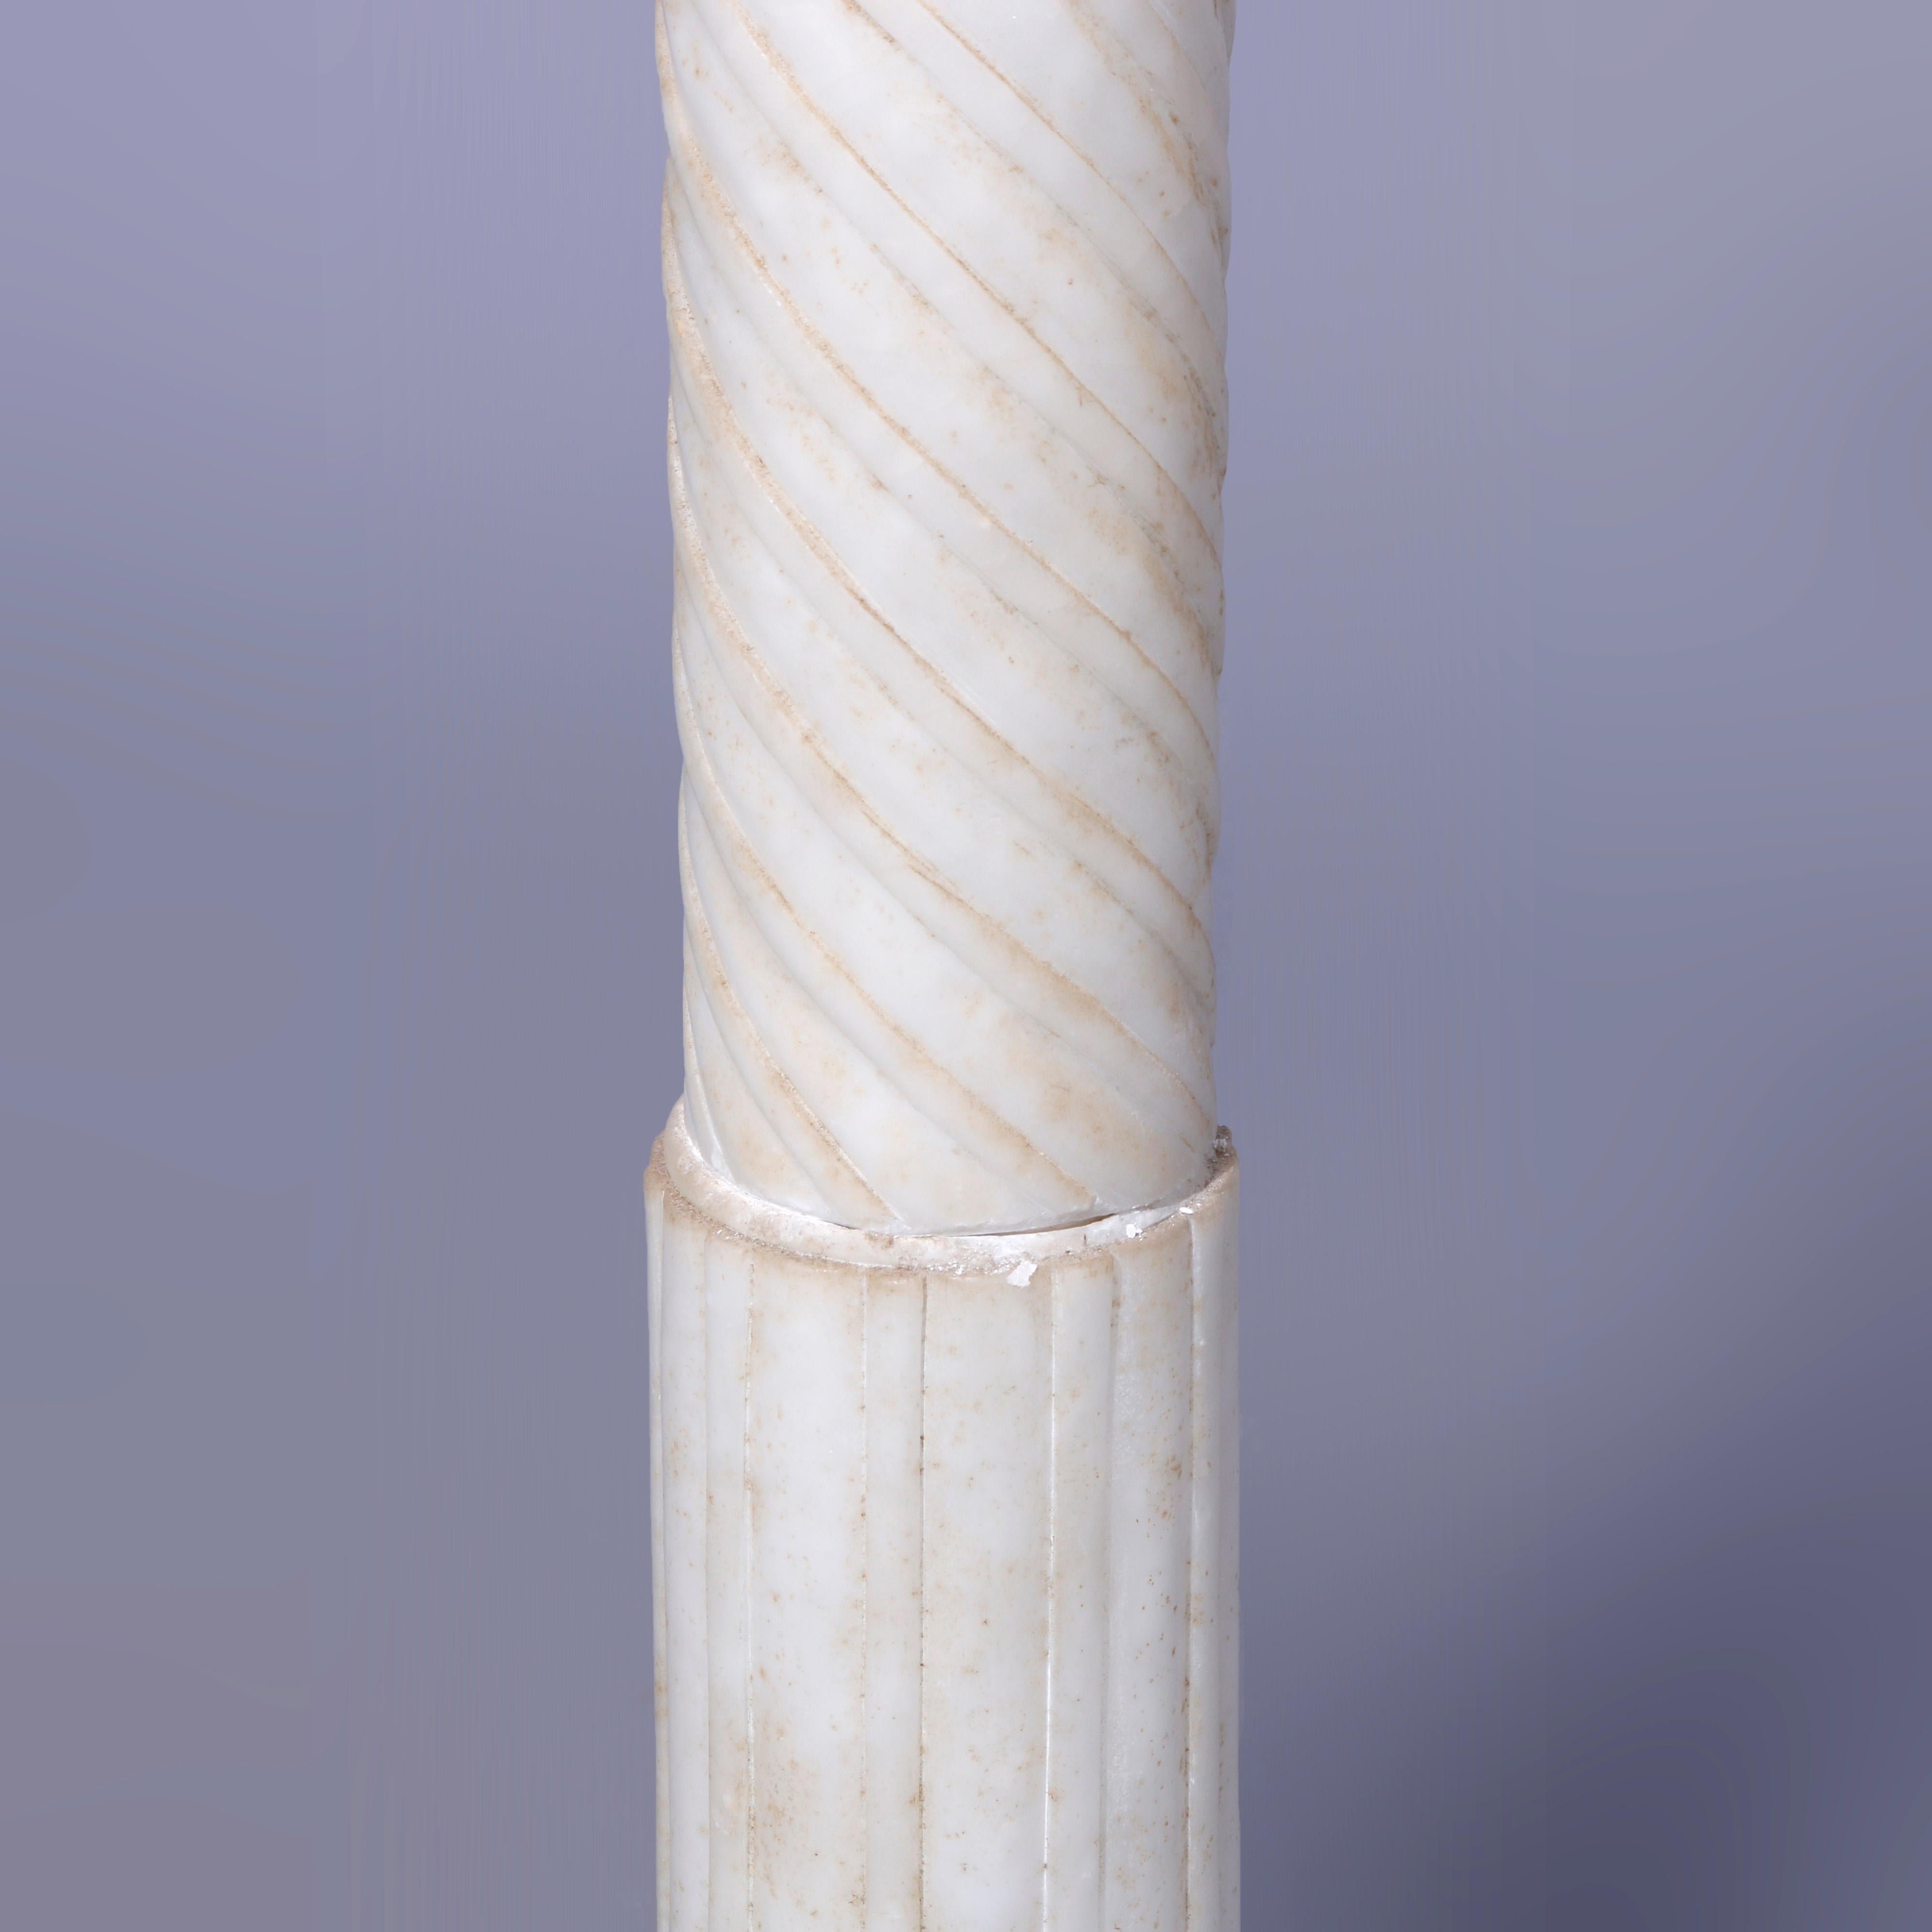 Antique Neoclassical Carved Alabaster Sculpture Pedestal, Rope Twist Form, 1890 For Sale 5